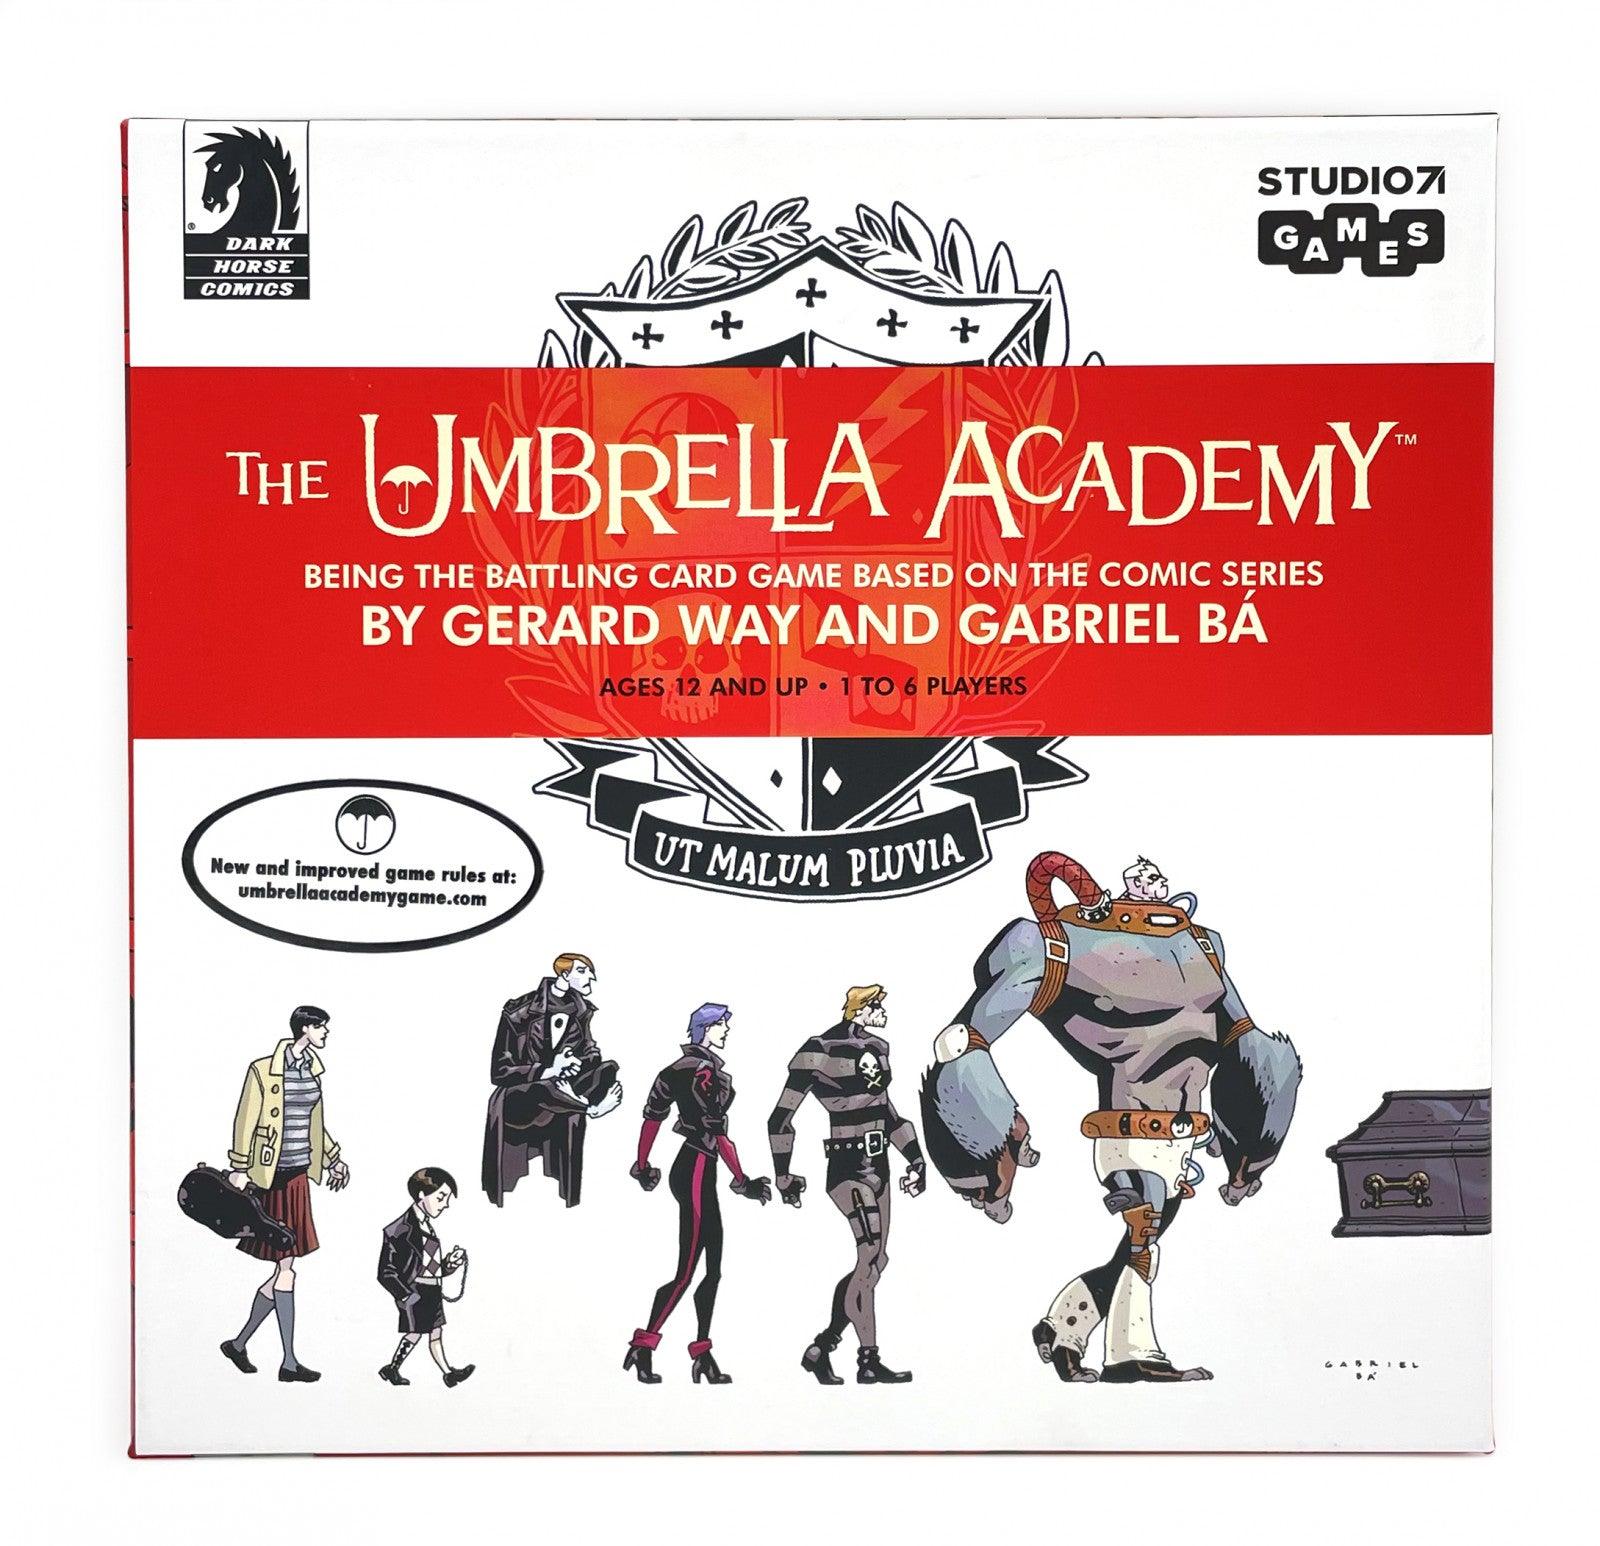 VR-85649 The Umbrella Academy Card Game - Studio71 - Titan Pop Culture